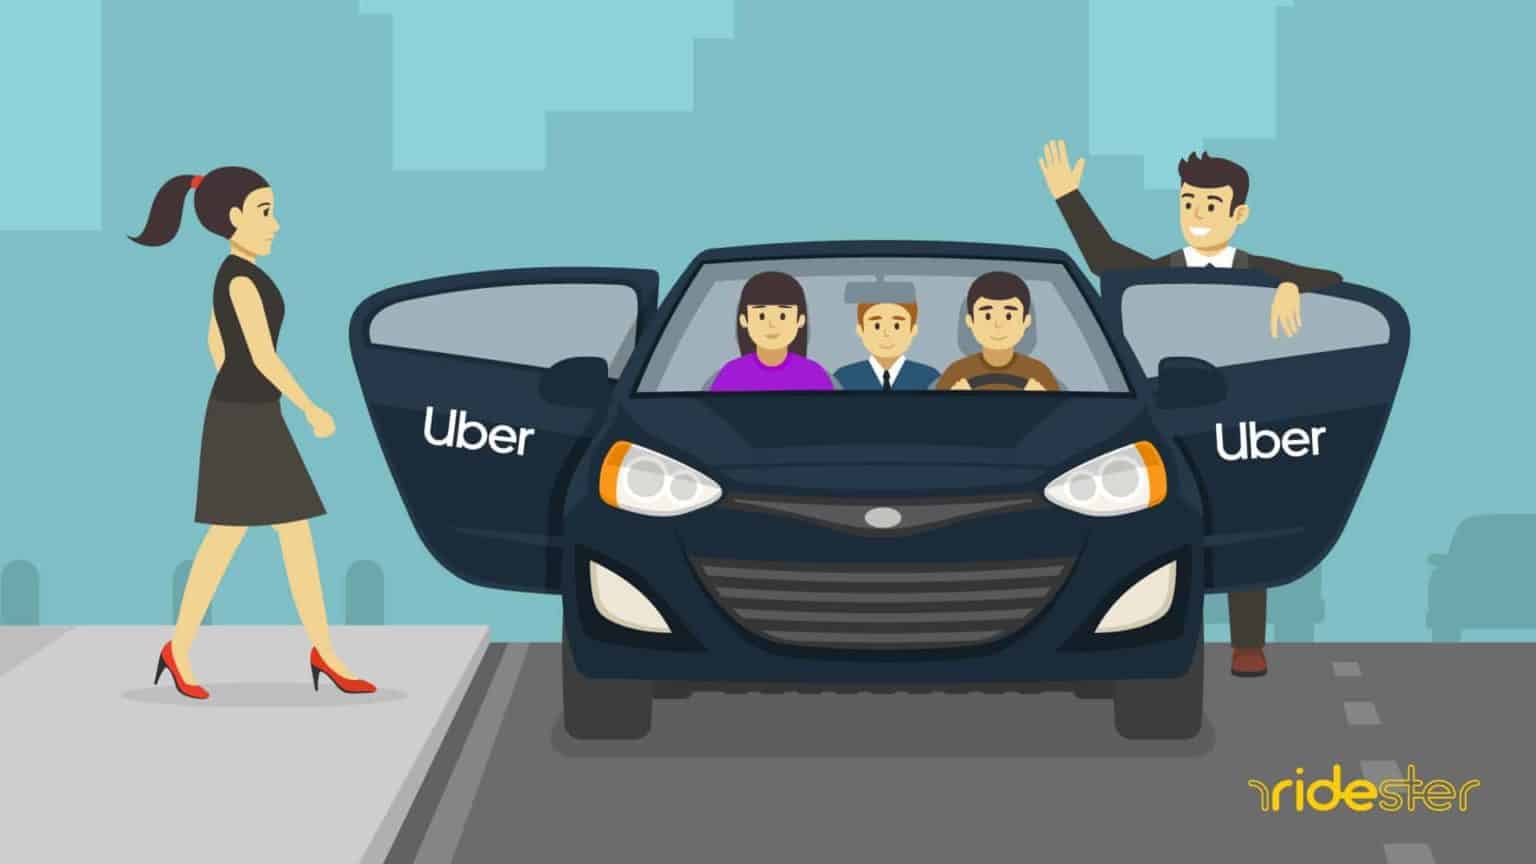 Uber Black Car List, Pricing, & More